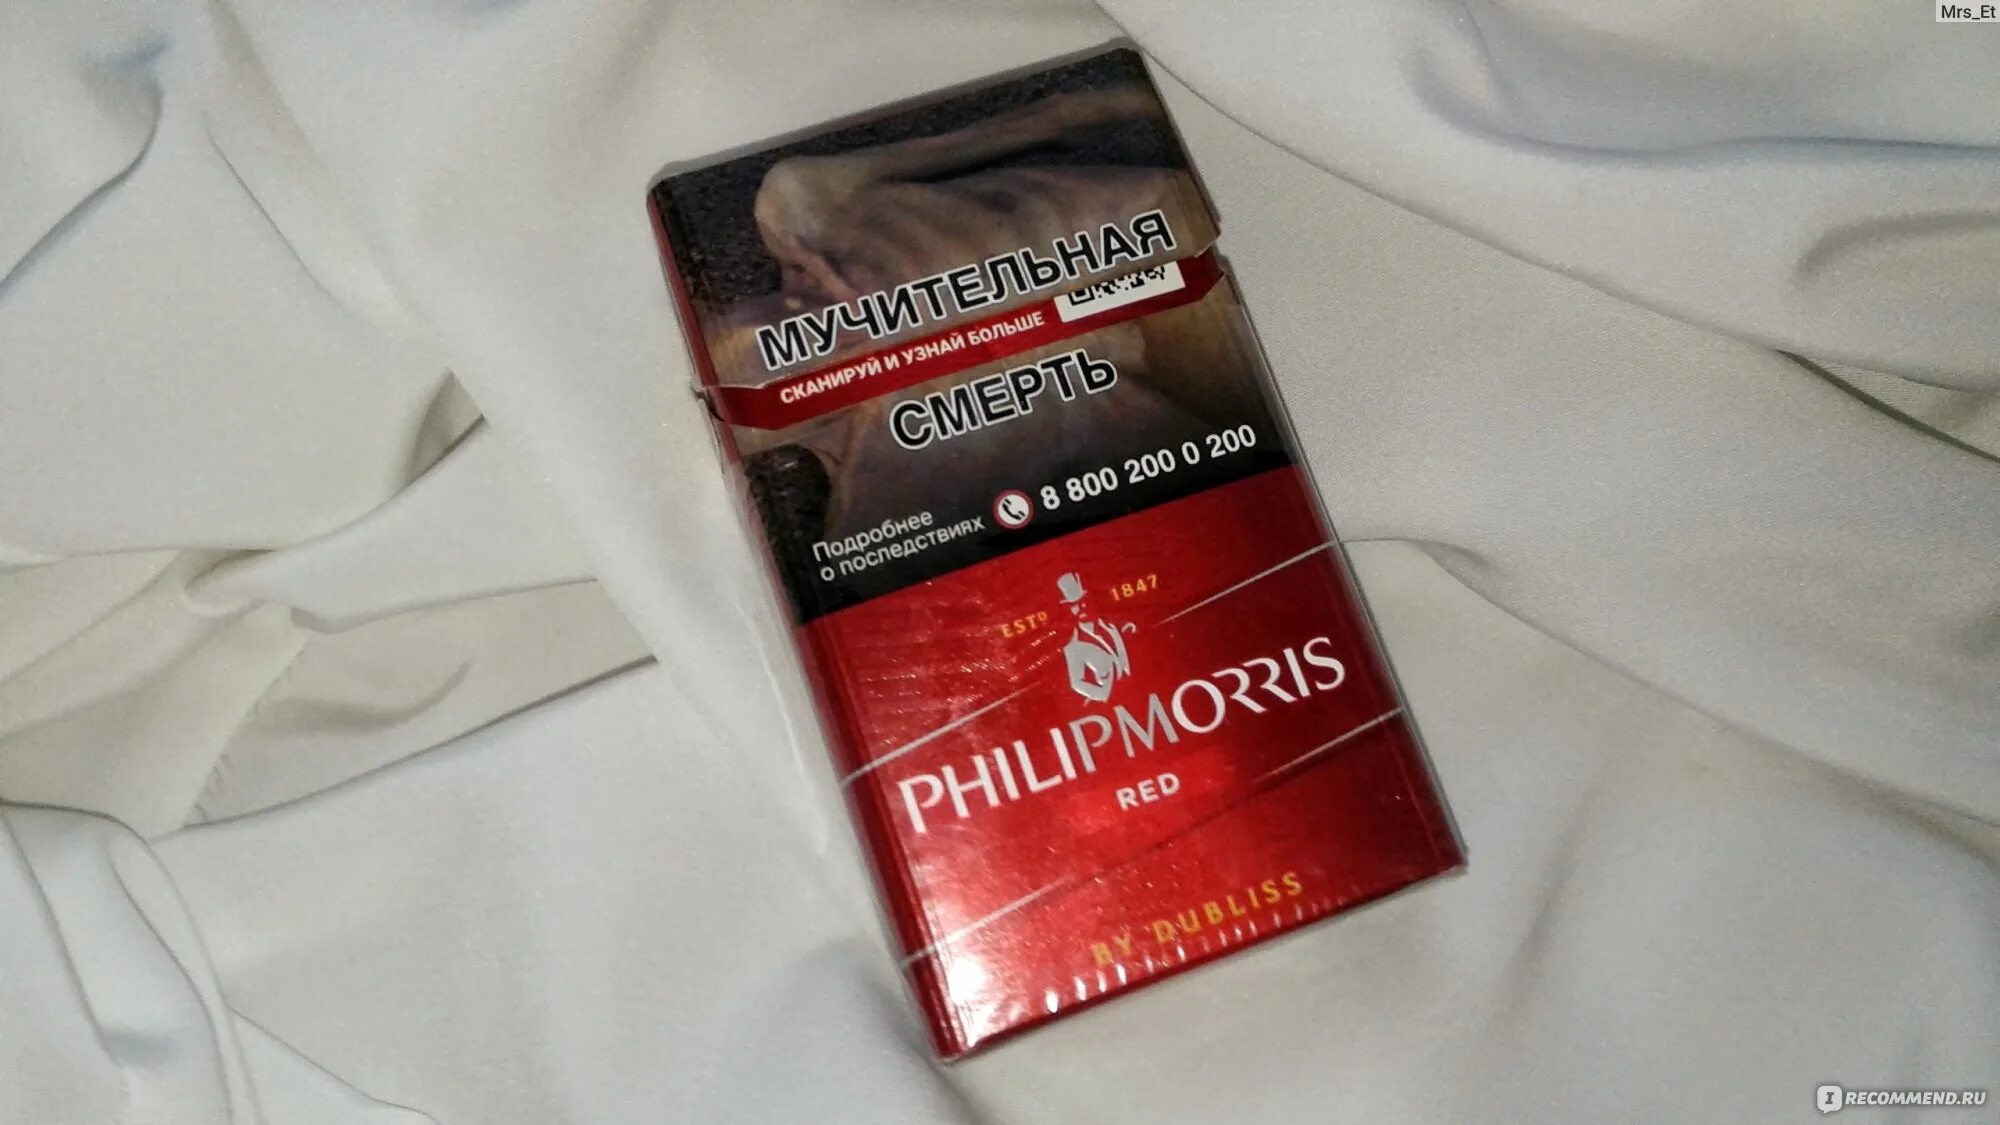 Филипс Морис сигареты красные. Сигареты Филип Моррис ред. Сигареты Philip Morris красный. Филипс Морис красный. Филлип моррис отзывы